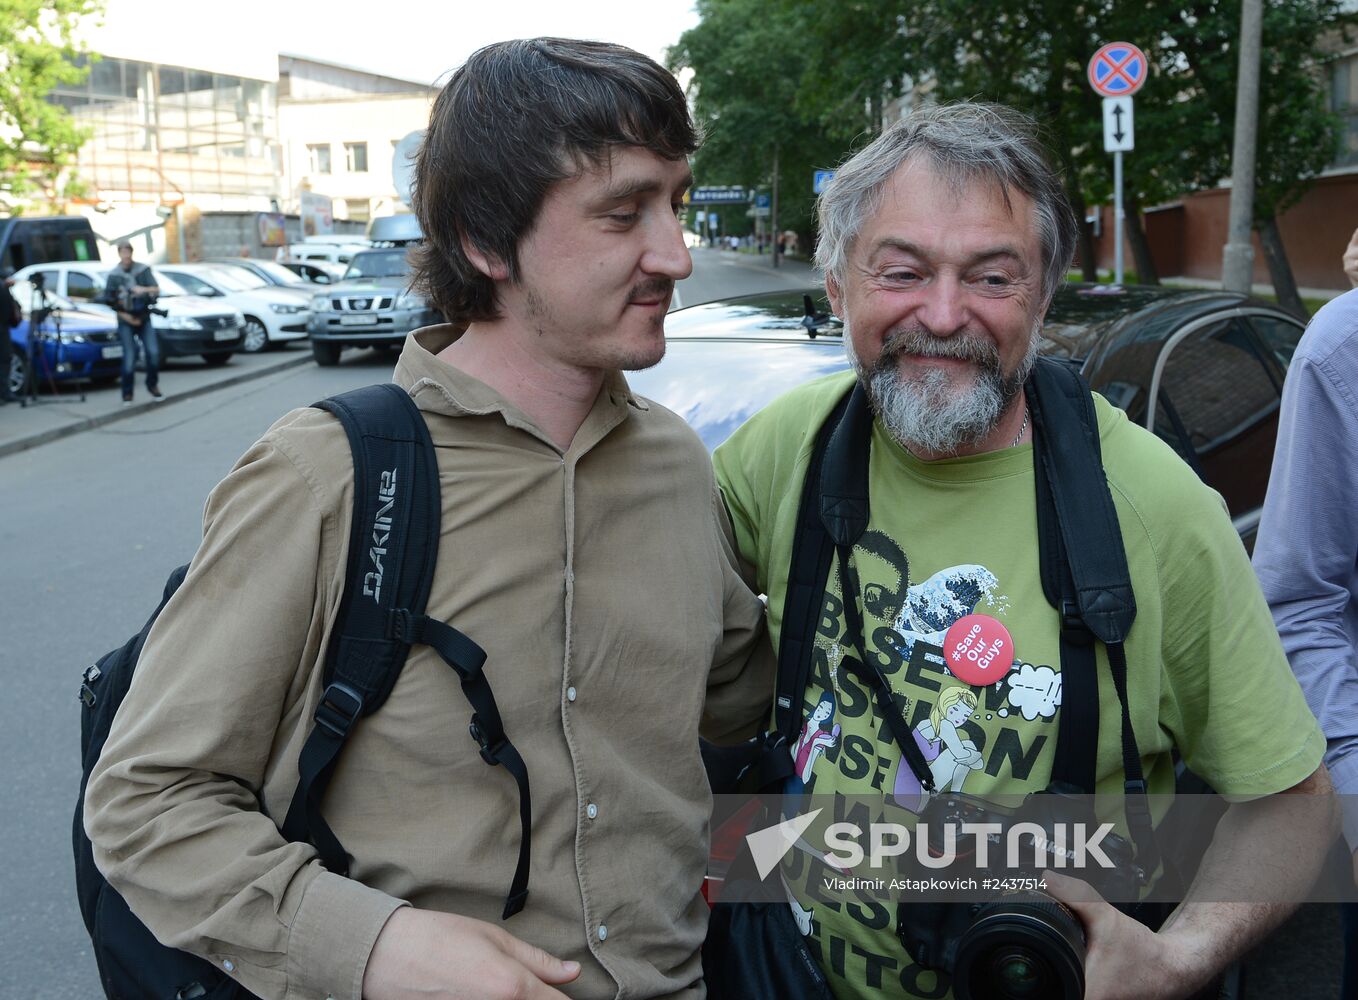 News conference with LifeNews reporters Oleg Sidyakin and Marat Saichenko